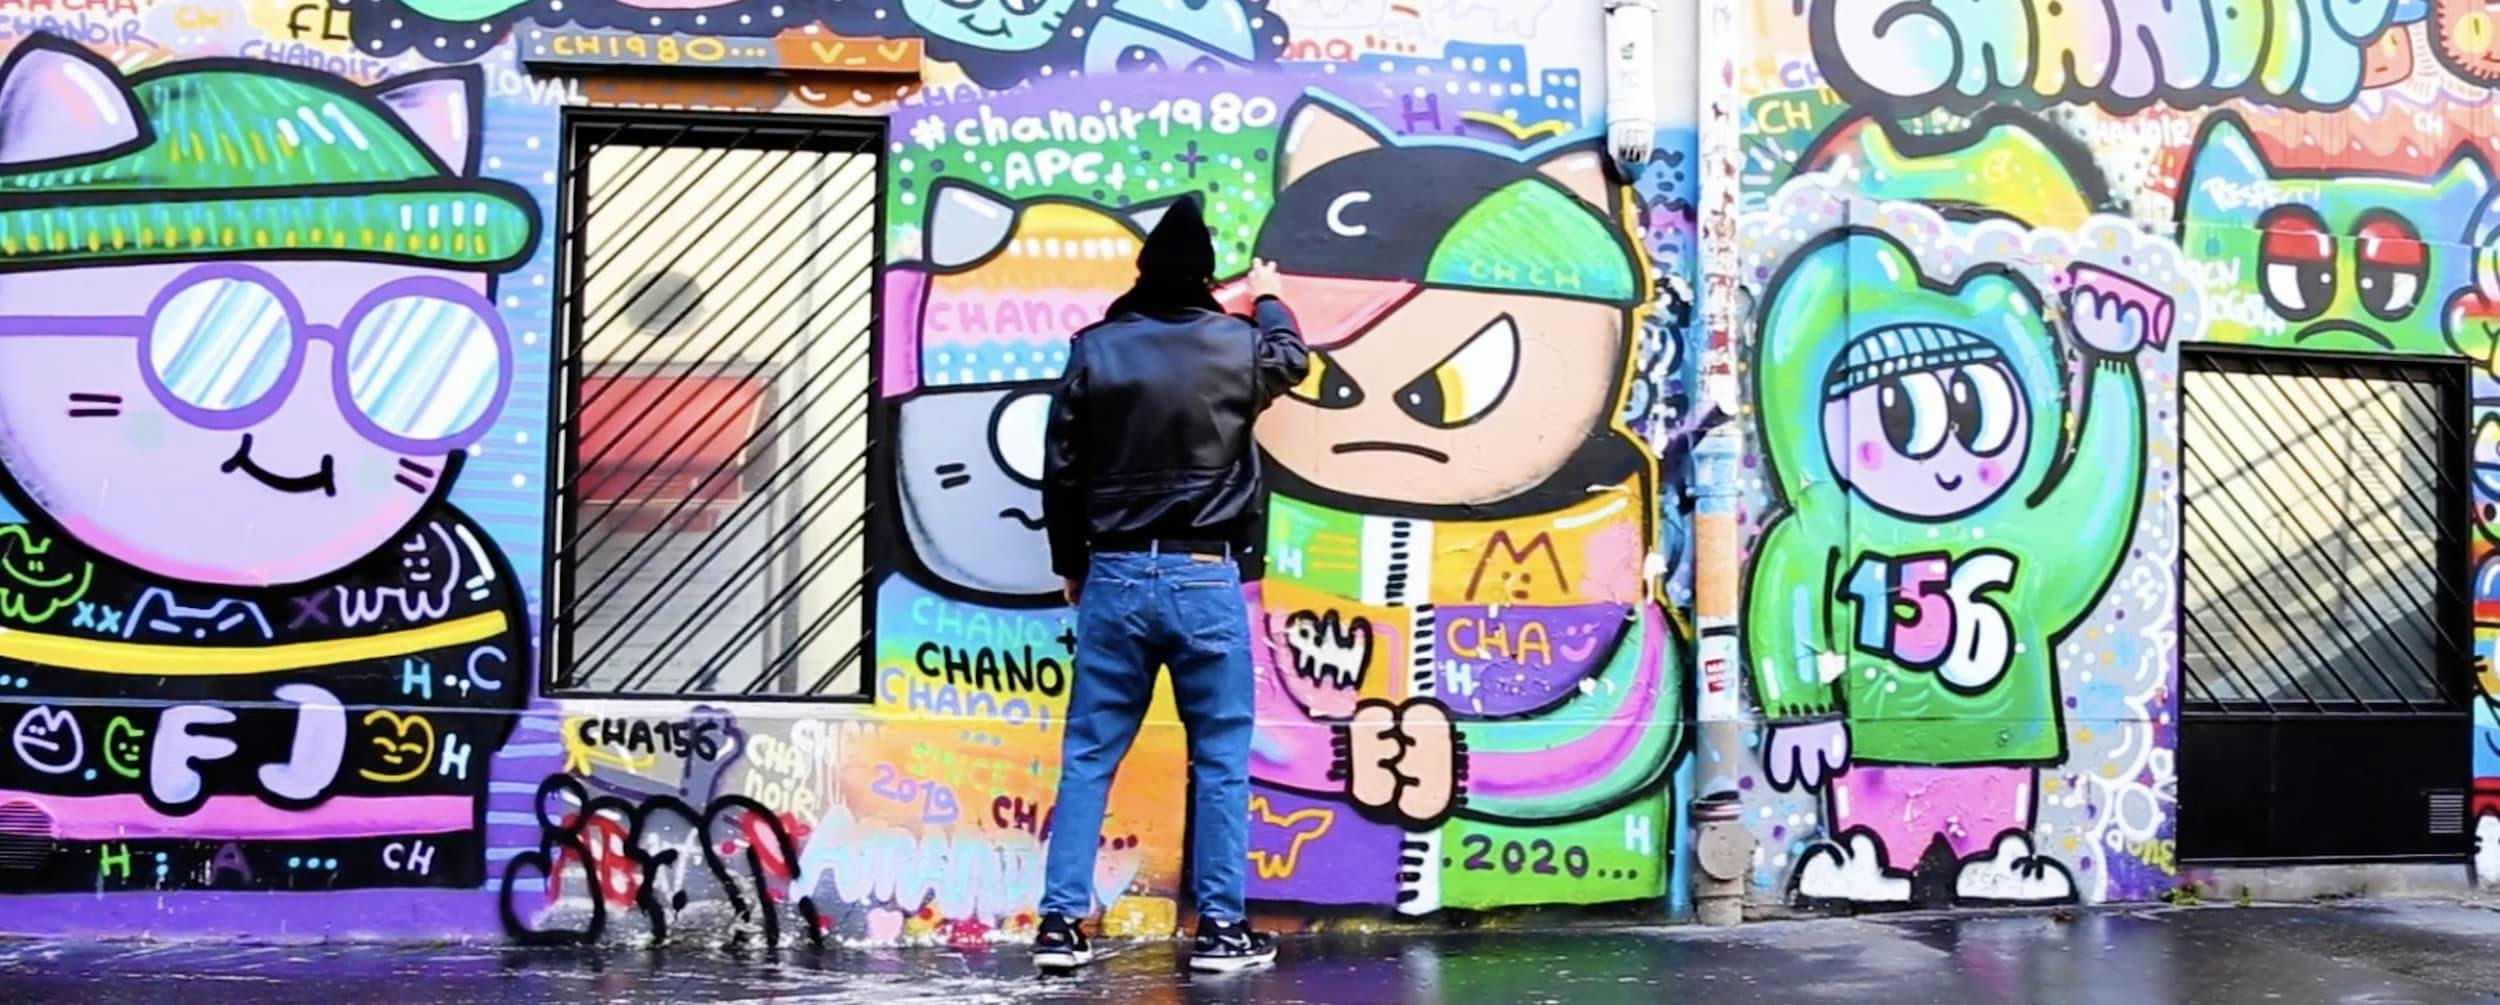 Chanoir post-graffiti